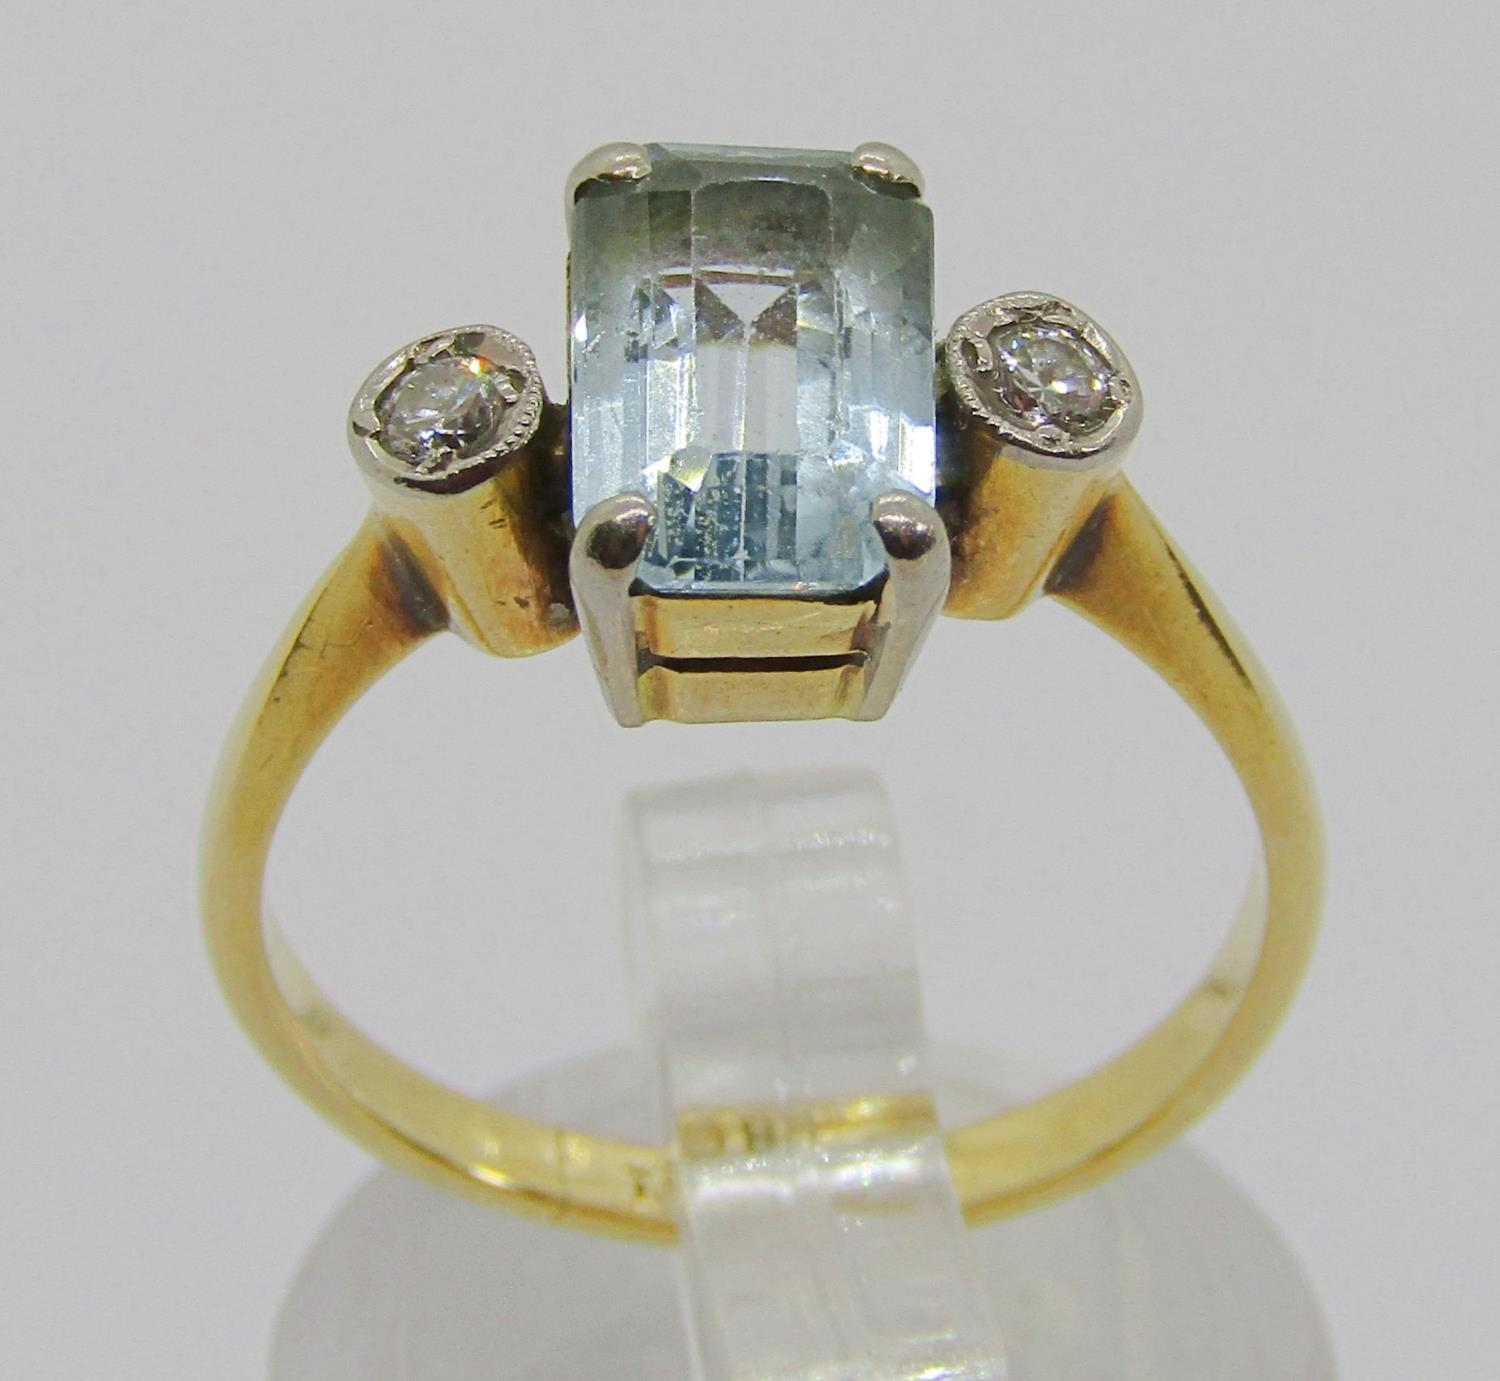 Early 20th century 18ct emerald-cut aquamarine and diamond three stone ring, size J, 3.4g - Image 2 of 5